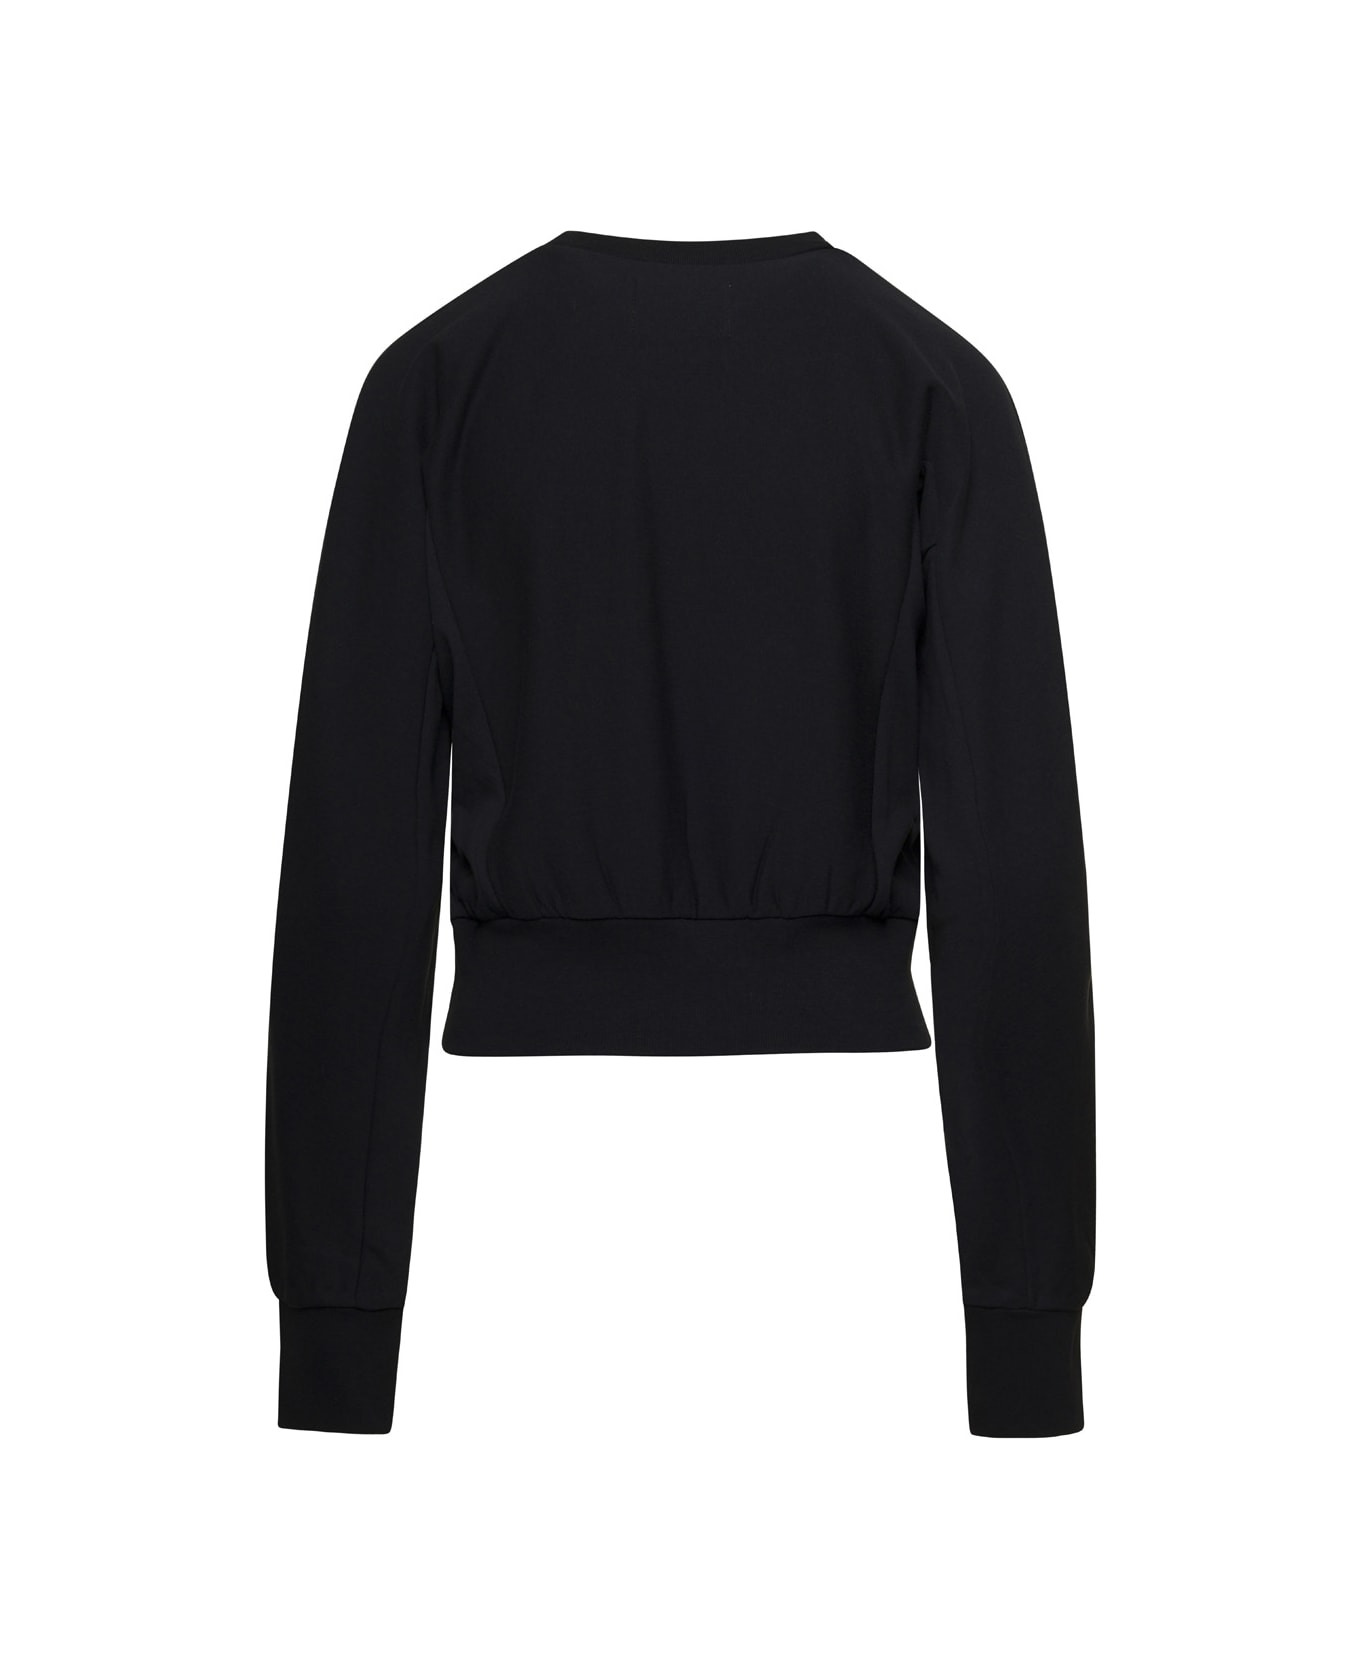 Vivienne Westwood Black Crewneck Sweatshirt With Embroidered Orb Logo In Cotton Woman - Black ニットウェア